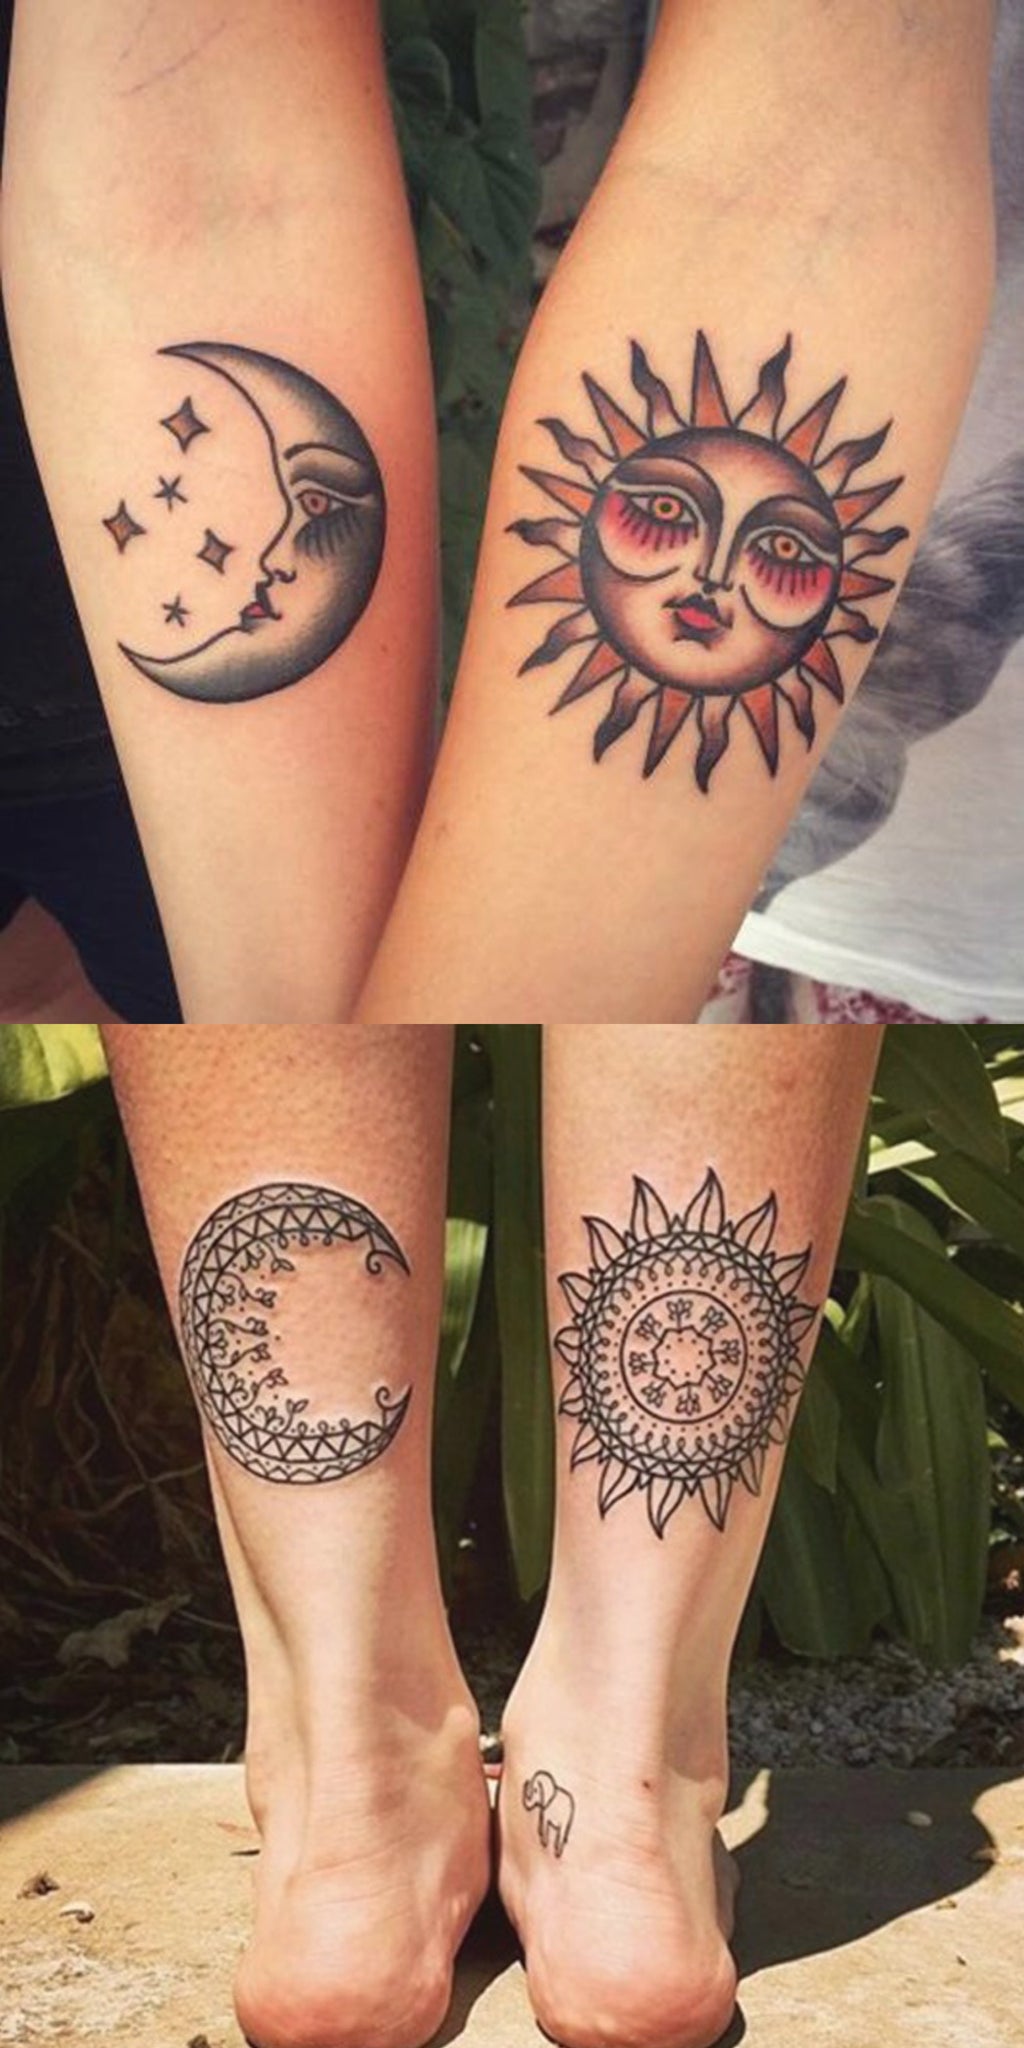 Cool Tribal Sun & Moon Matching Tattoo Ideas fo Best Friends - Bohemian Boho Crescent Forearm Ankle Tat for Couples -  sol y luna que coinciden con las ideas del tatuaje del antebrazo para los mejores amigos - www.MyBodiArt.com